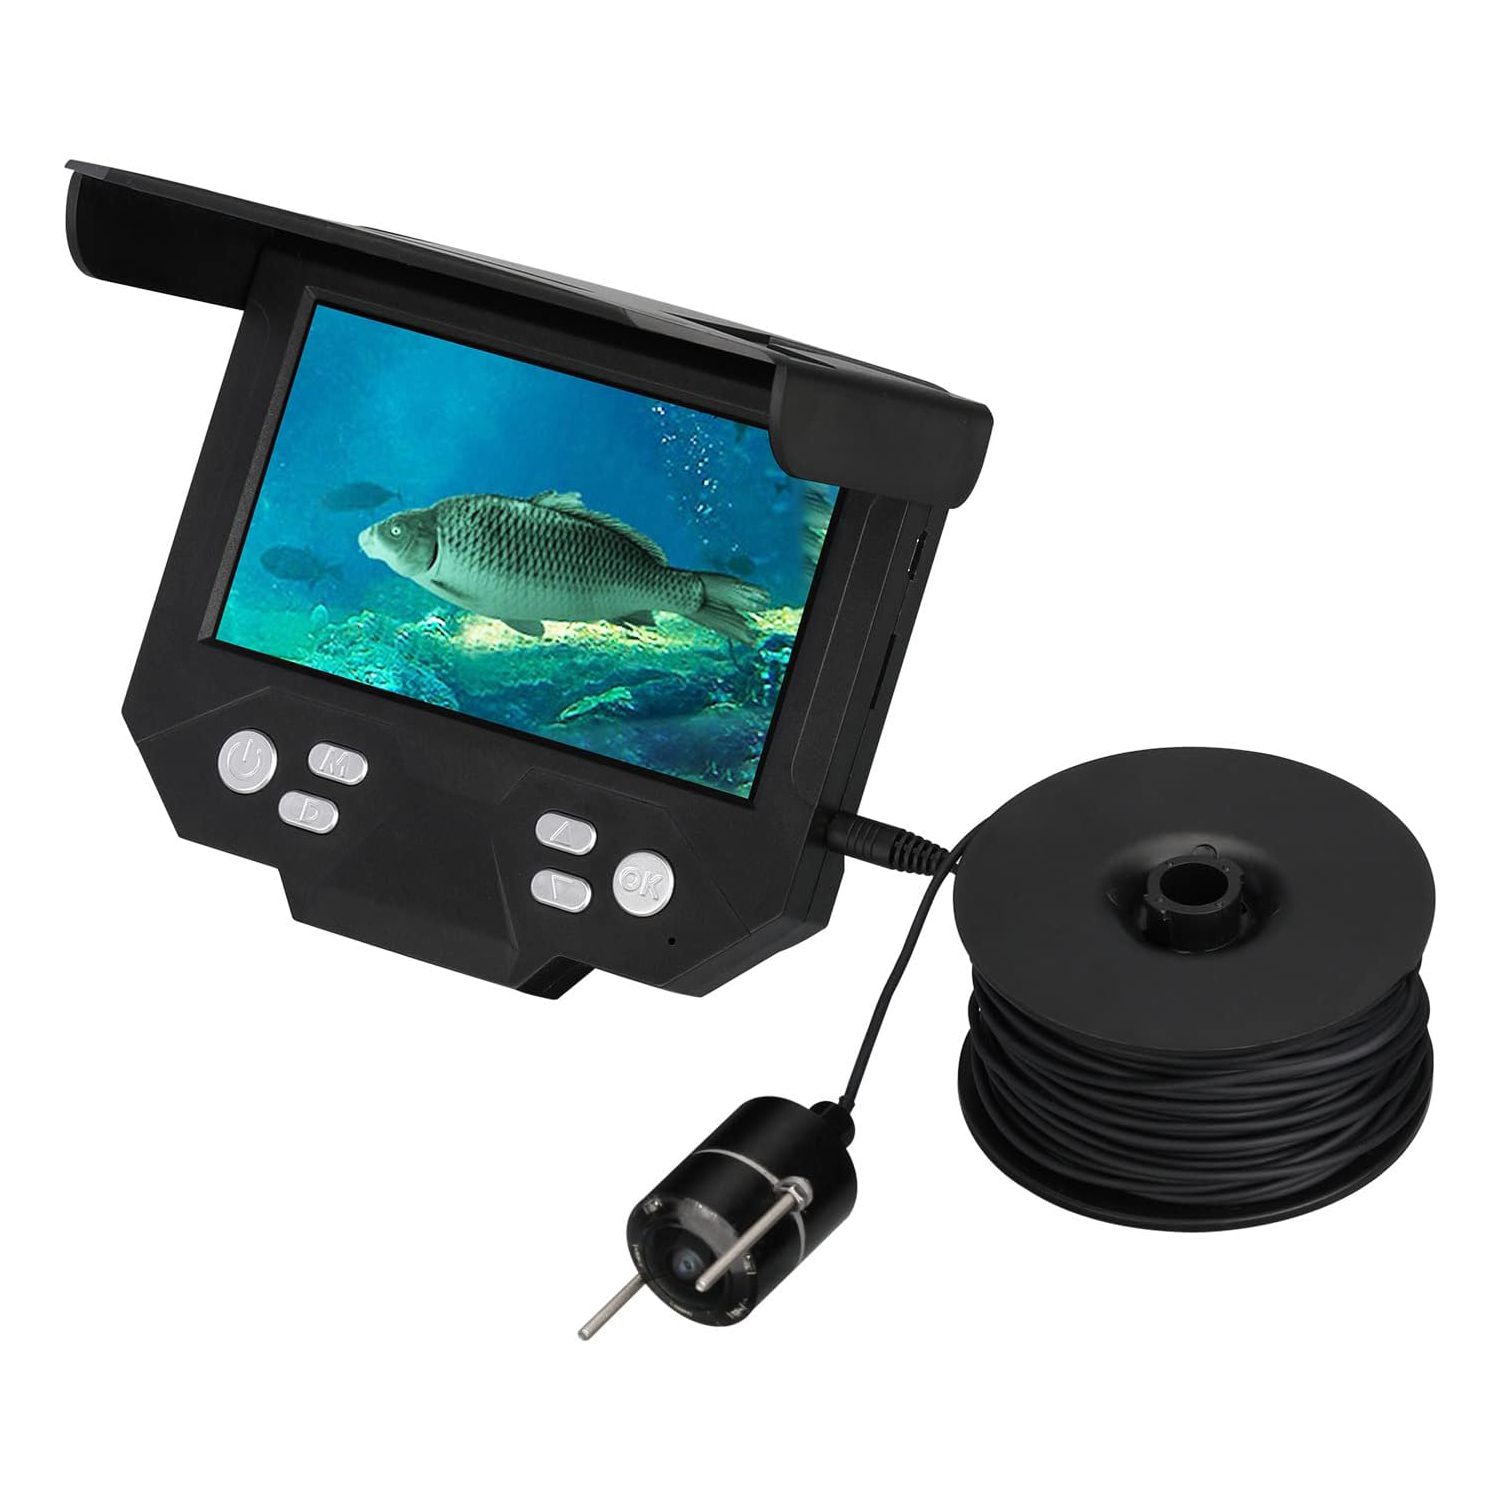 دوربین ماهیگیری زیر آب Professional Underwater Fish Finder Fish Detector Kit 4.3″ Screen 1080P Video 30M Underwater